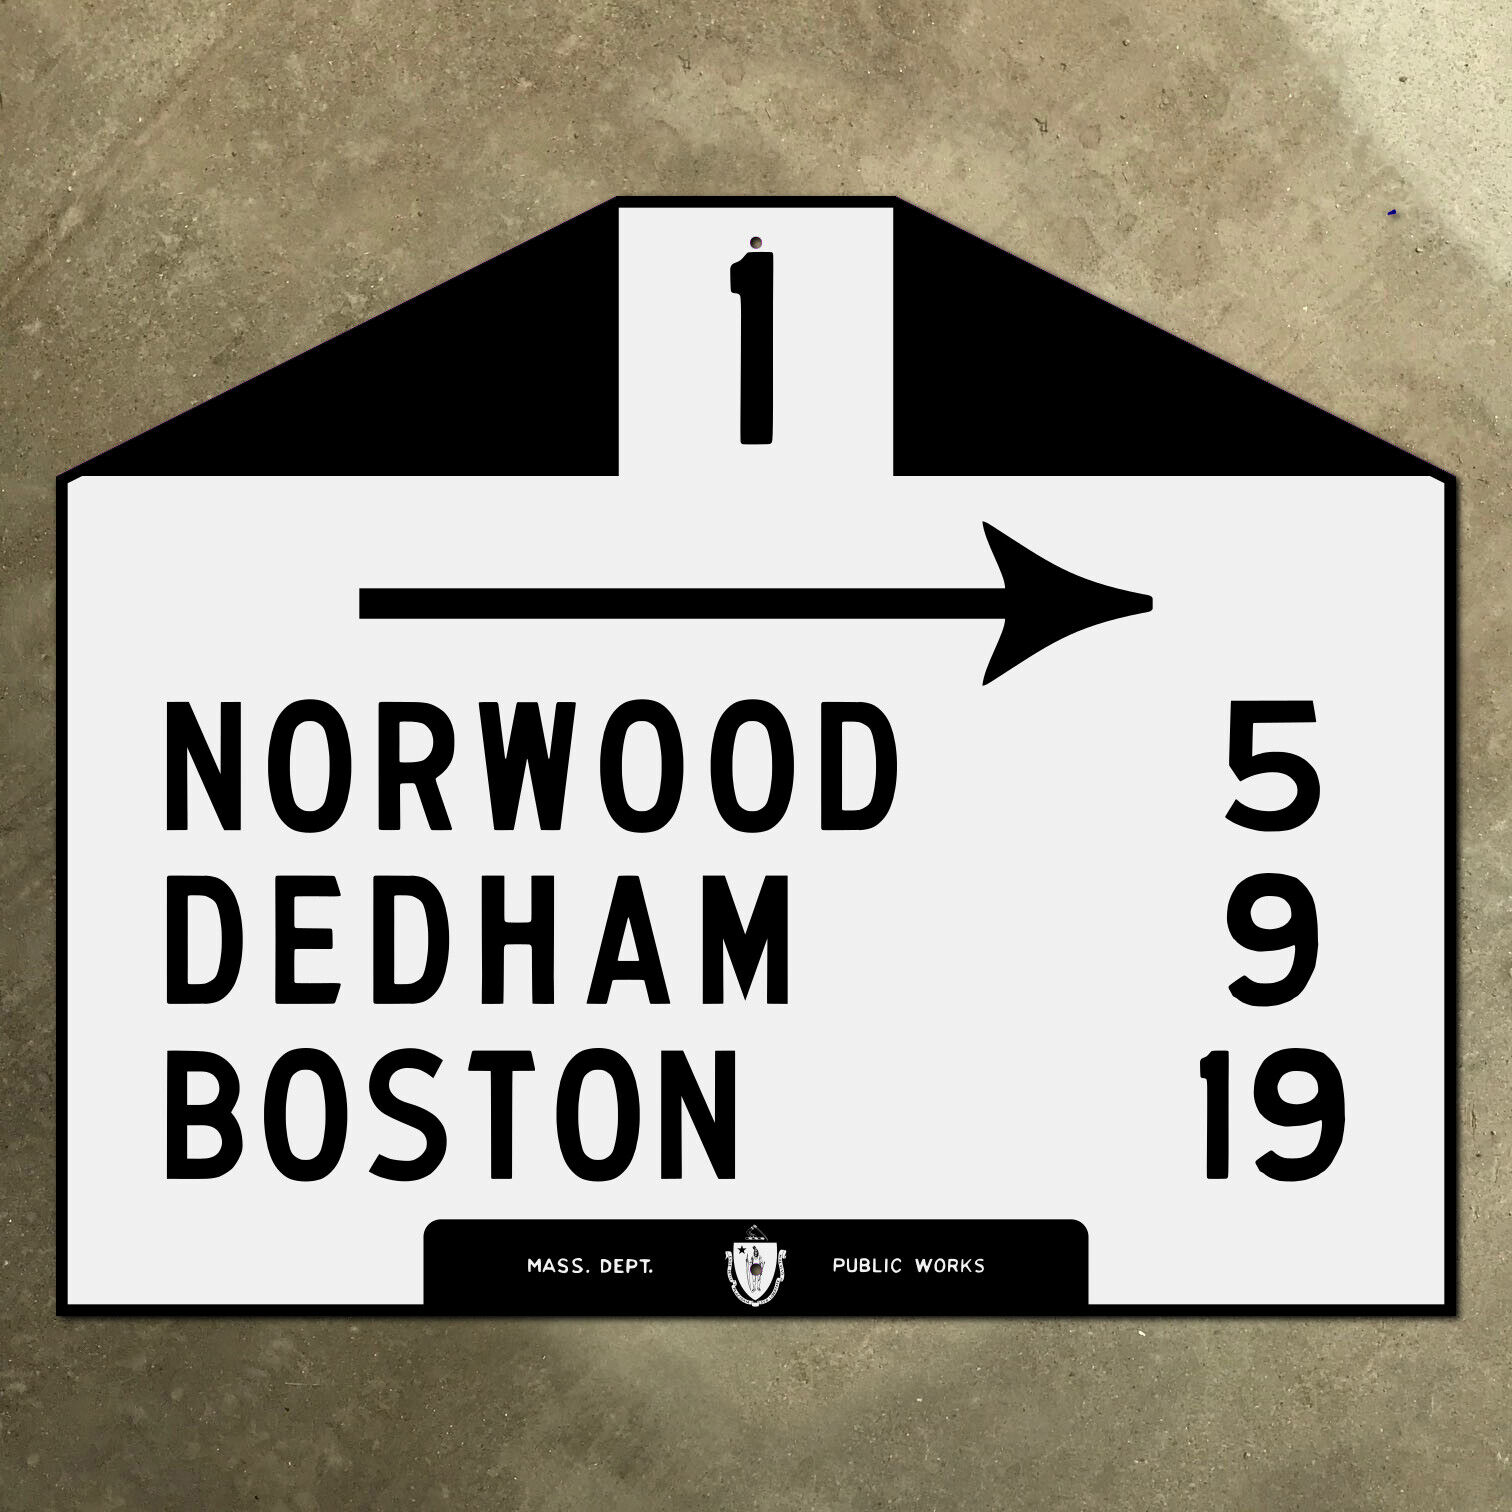 Norwood Dedham Boston Massachusetts US highway 1 marker road sign 1930 14x11